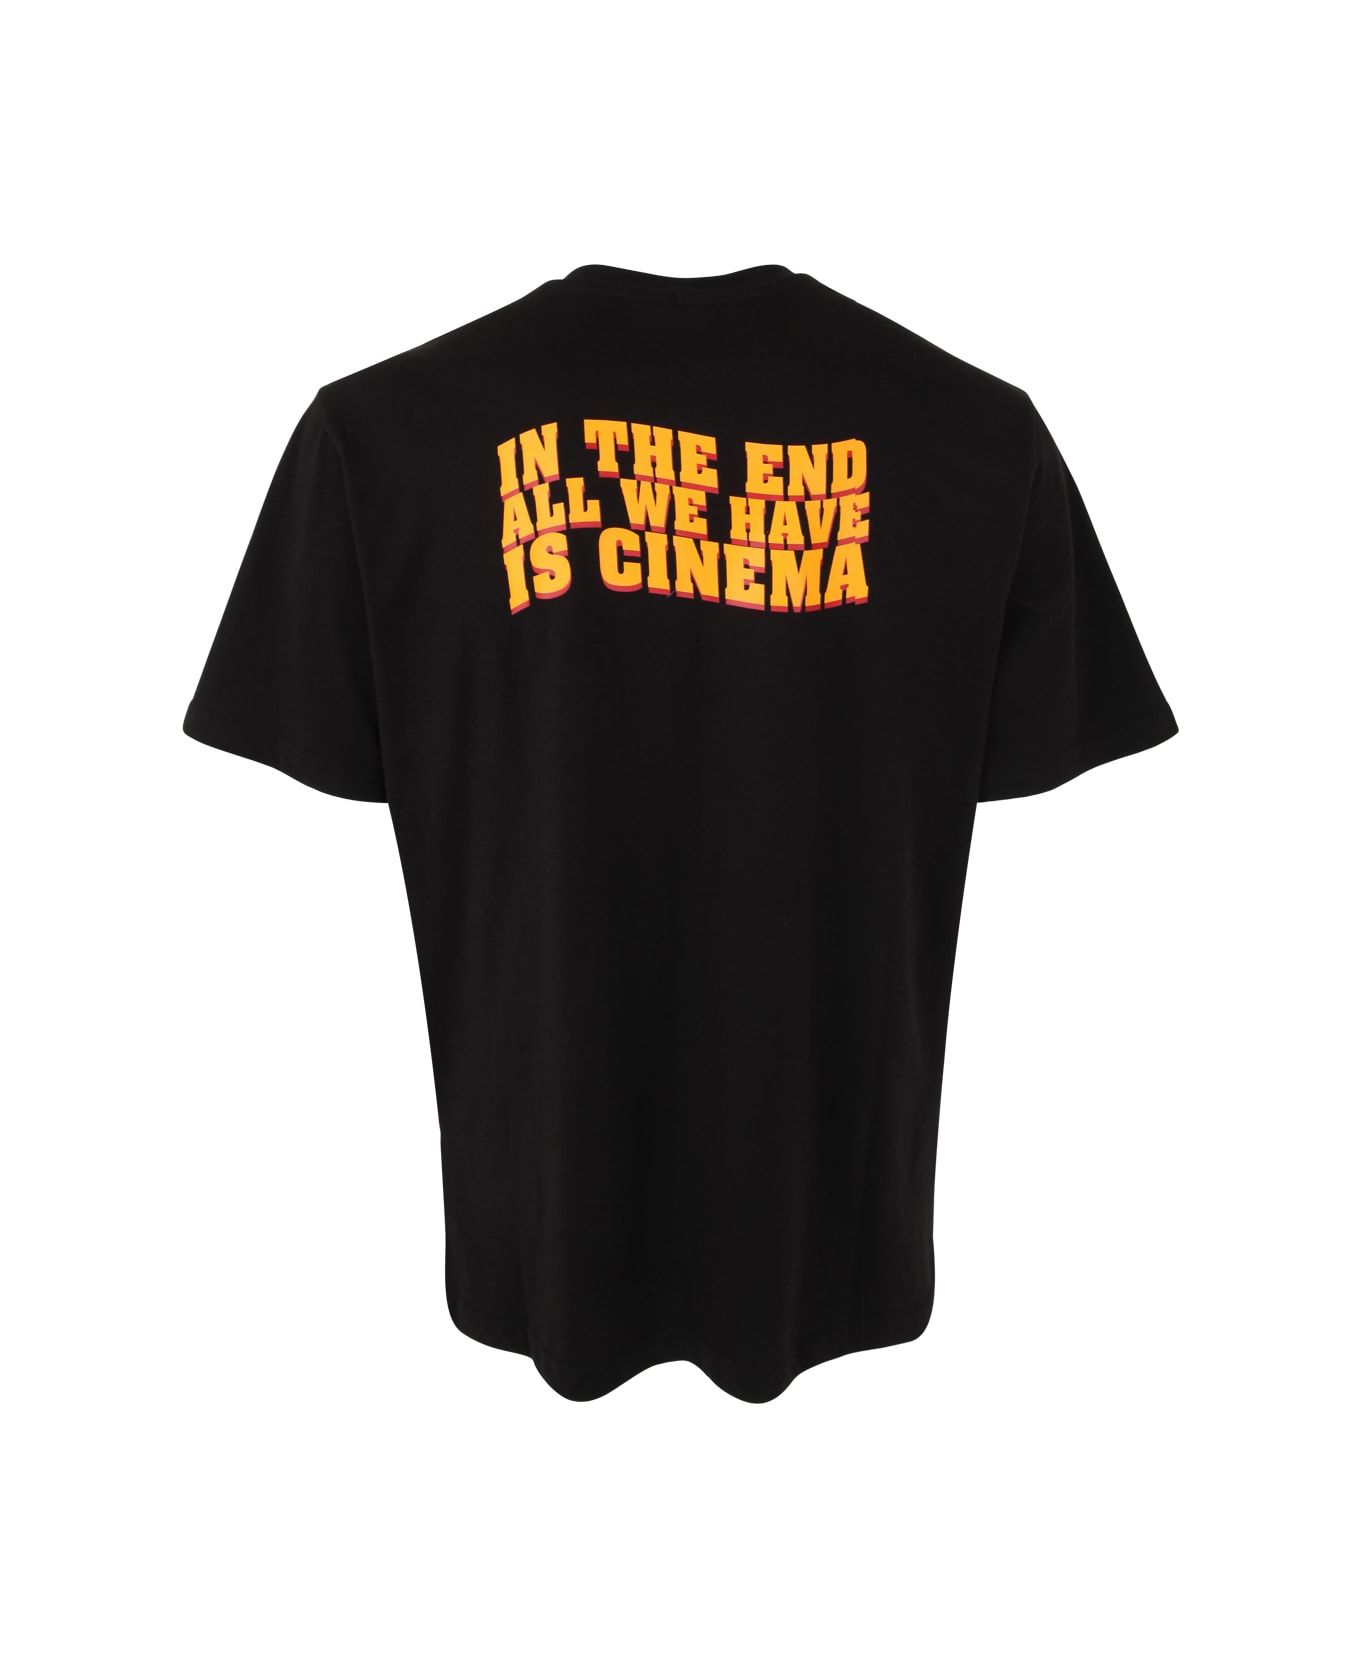 Throwback Cinema T-shirt - Black シャツ